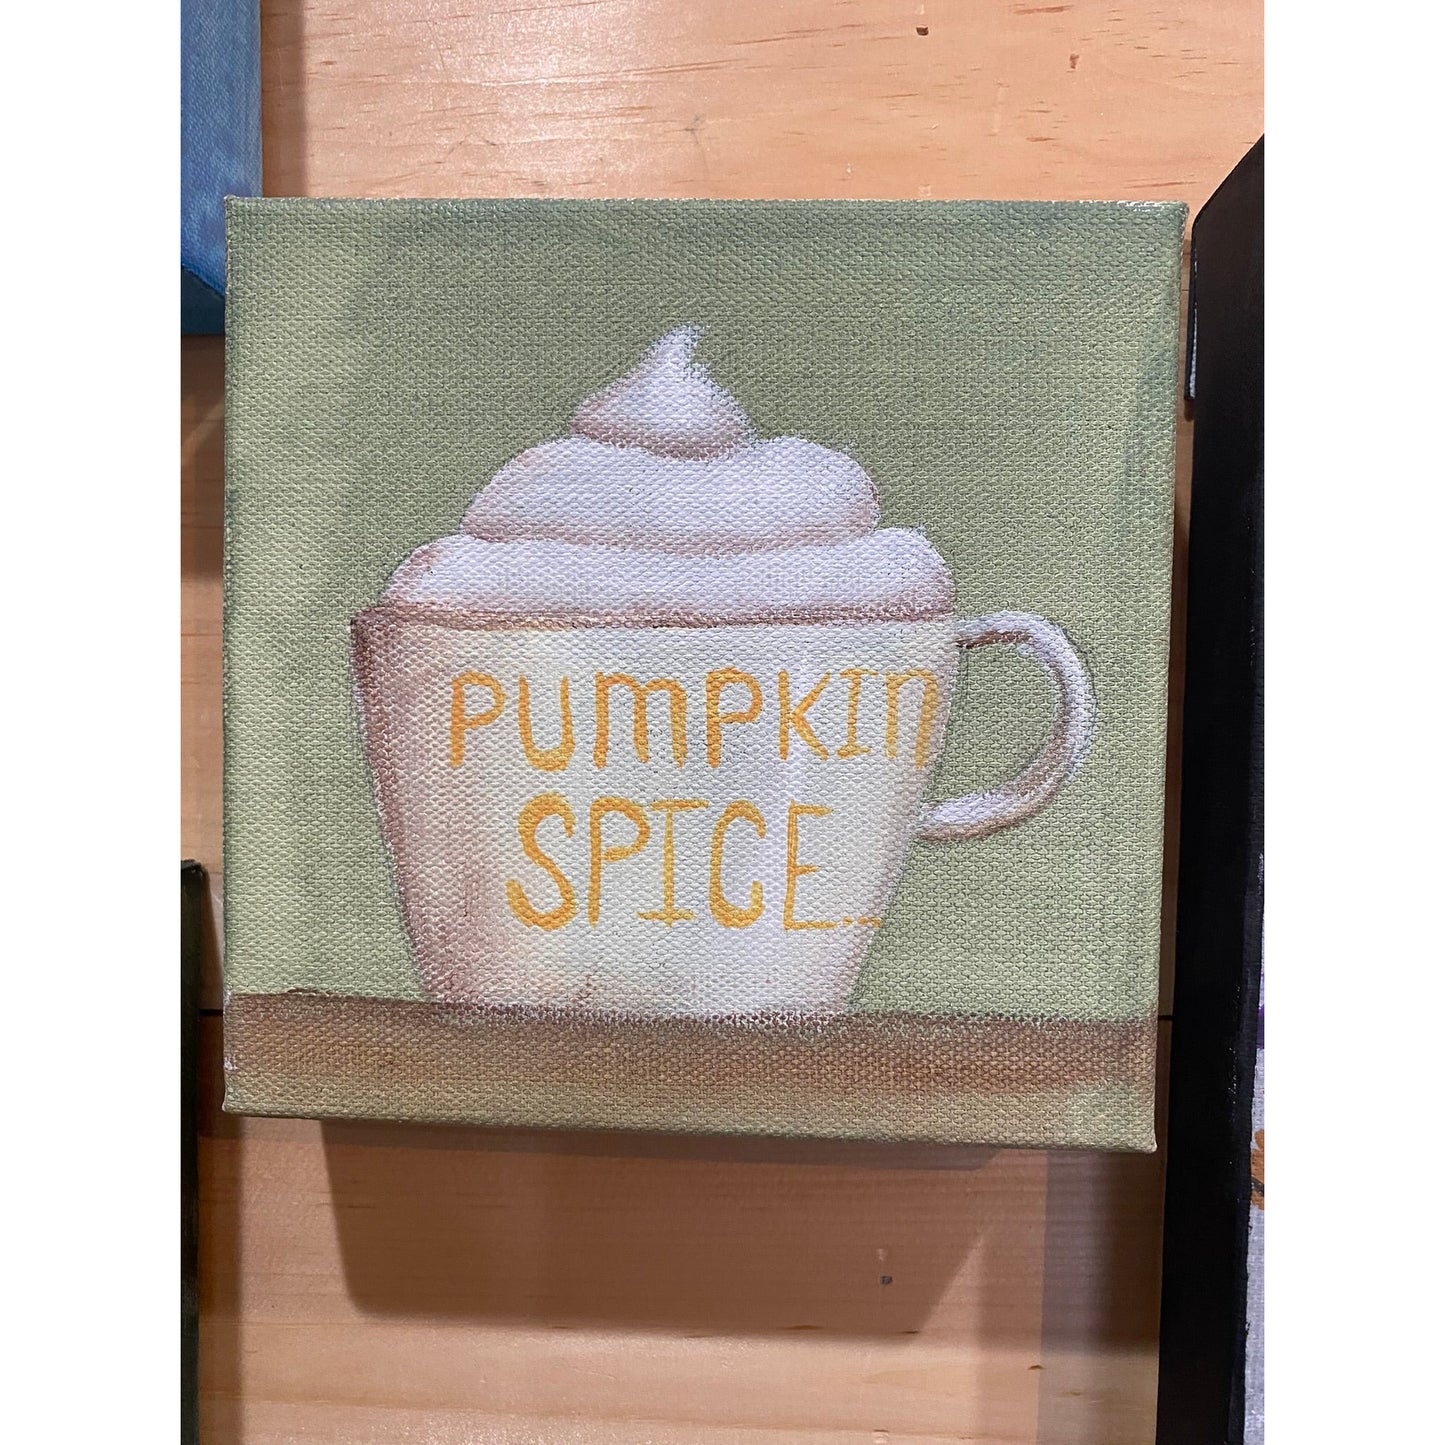 Pumpkin Spice... - Original Artwork, Pumpkin Spice Latte Cup